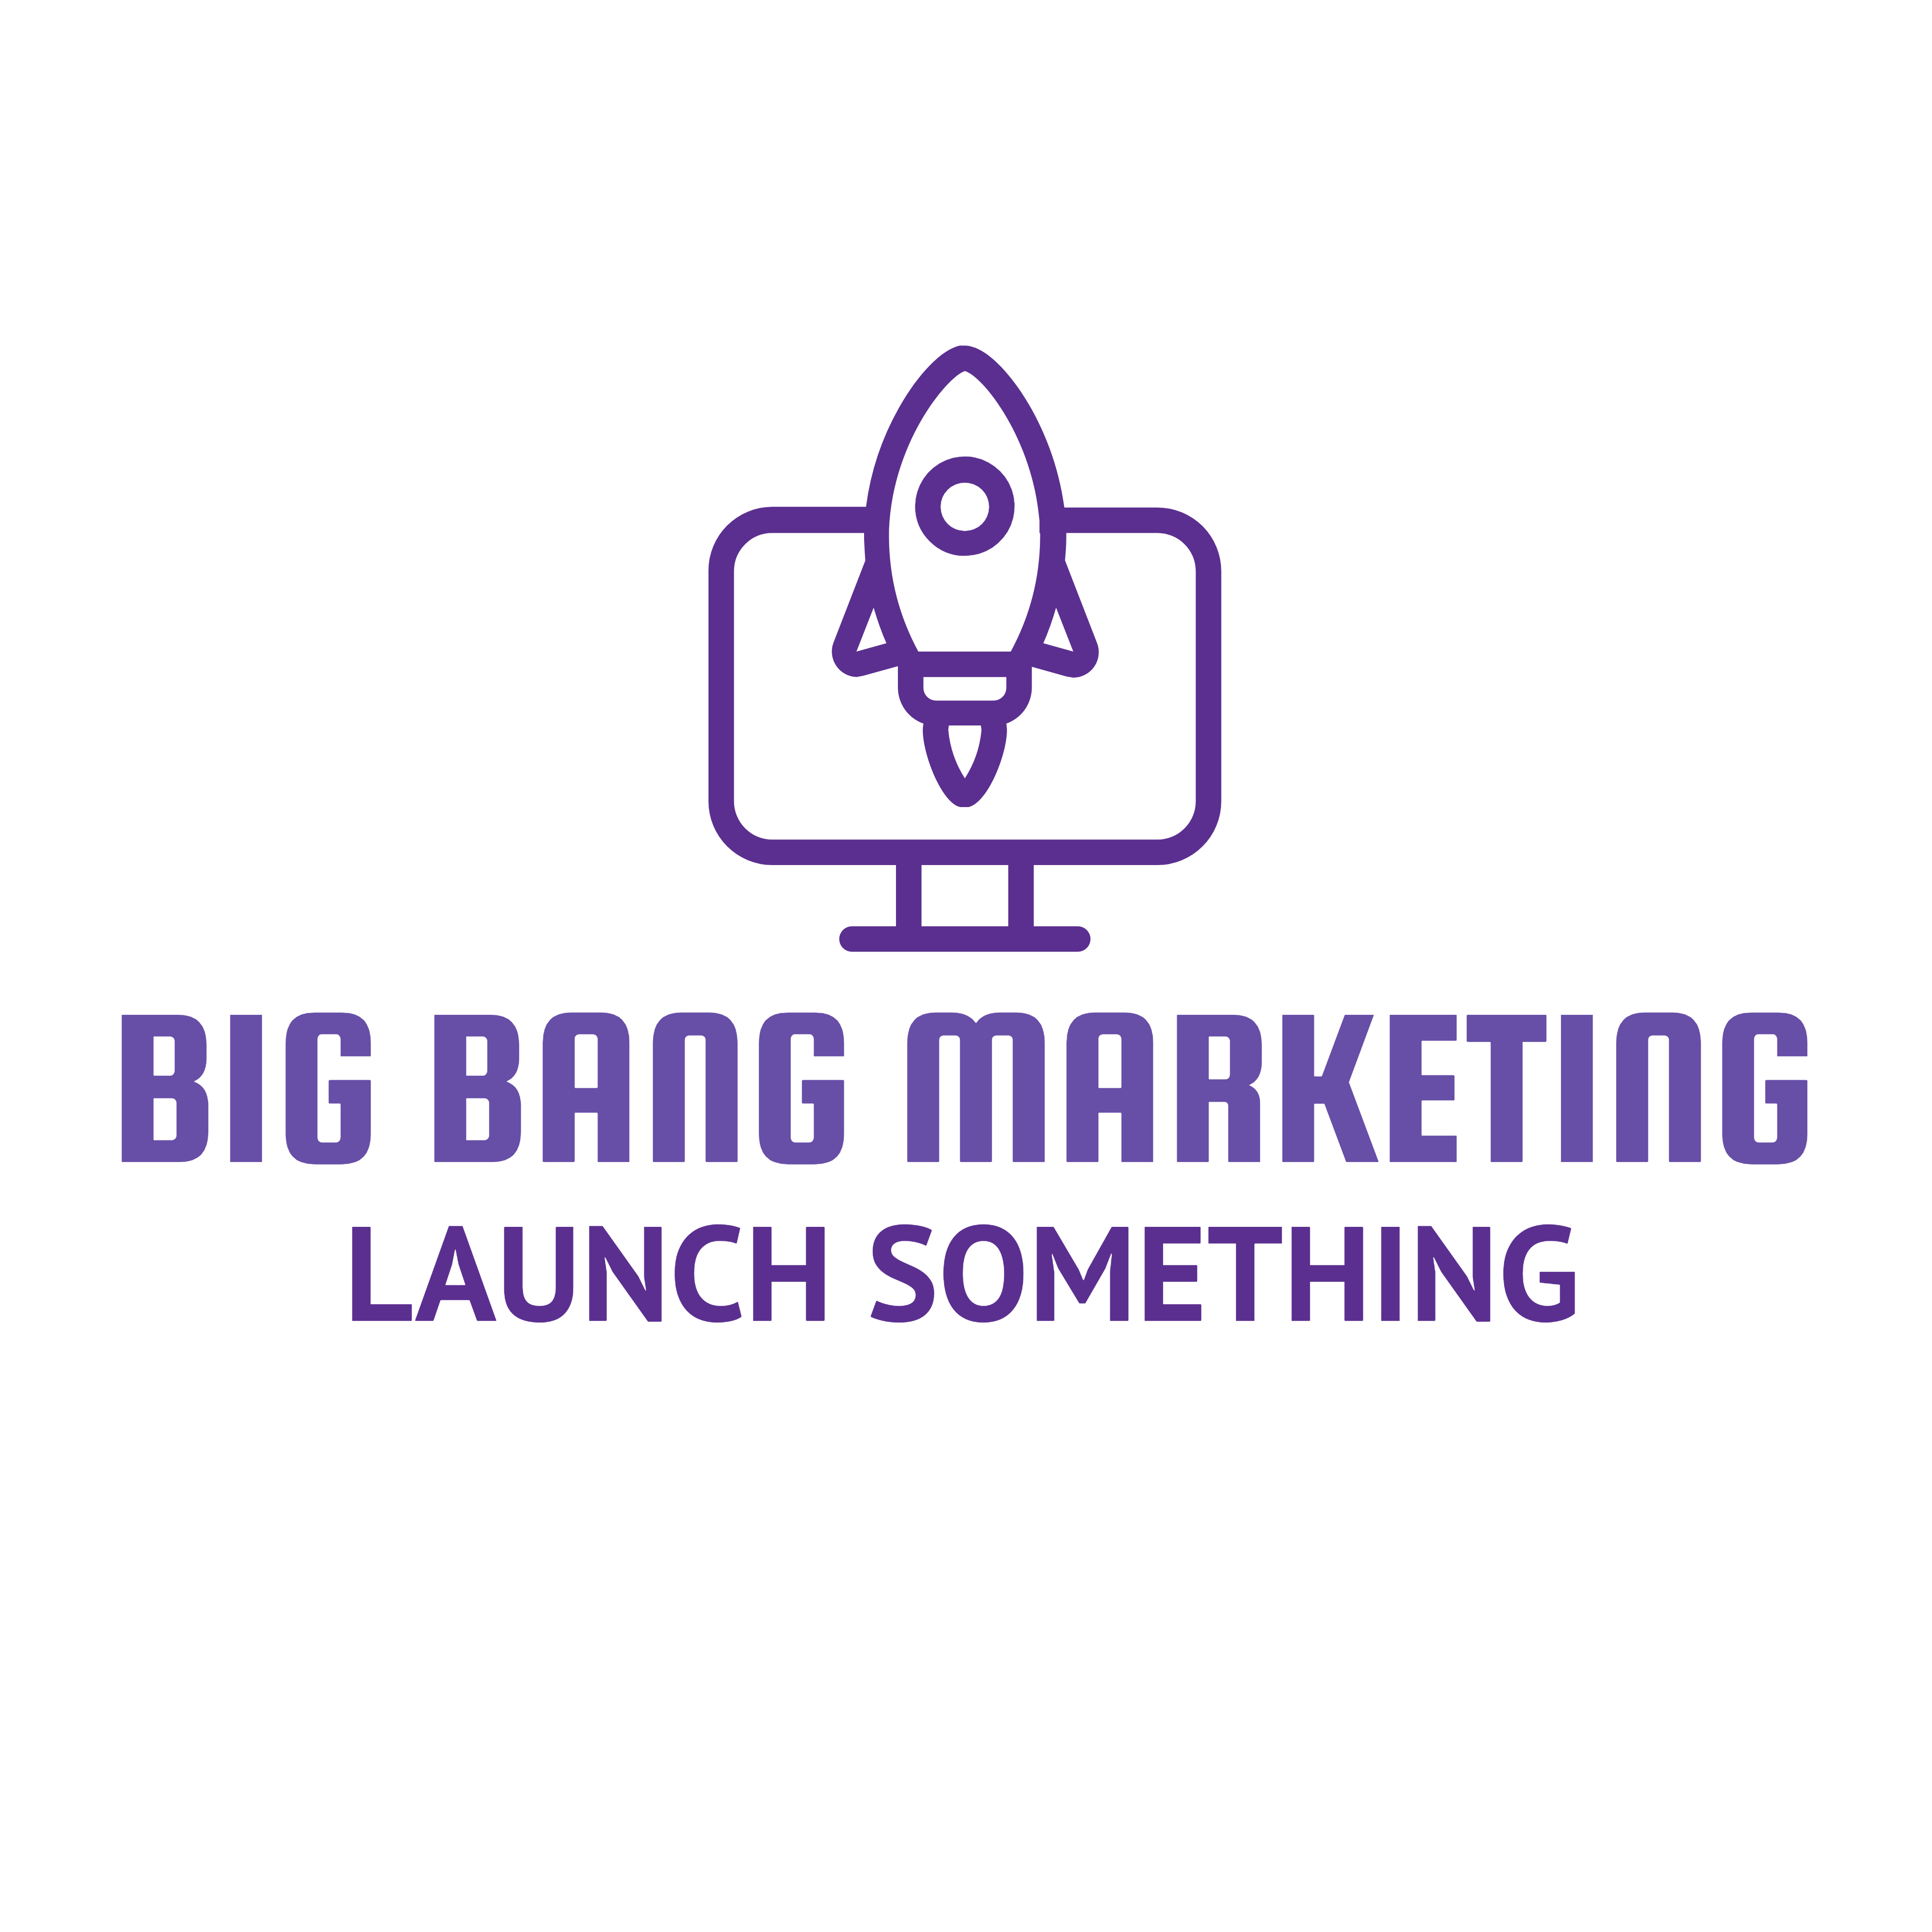 Best SEO Company Logo: Big Bang Marketing